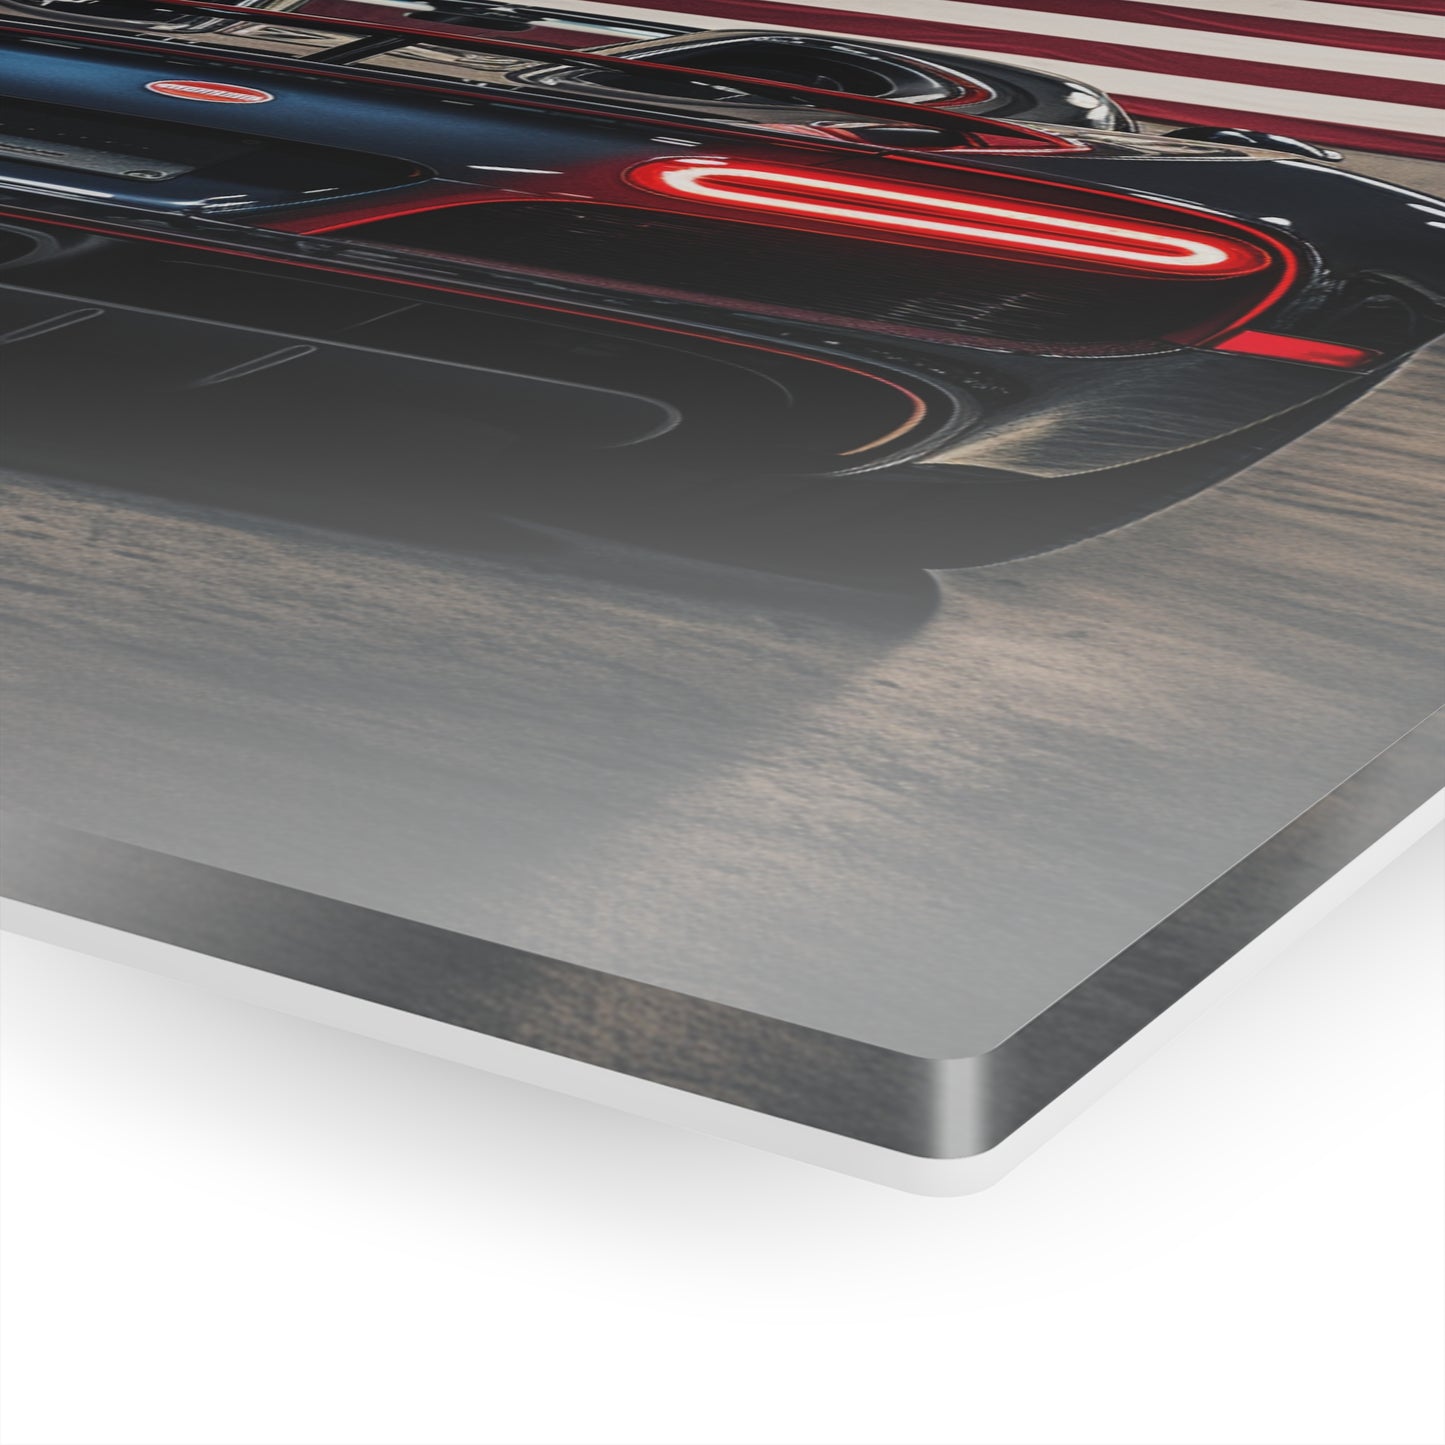 Acrylic Prints American Flag Background Bugatti 4